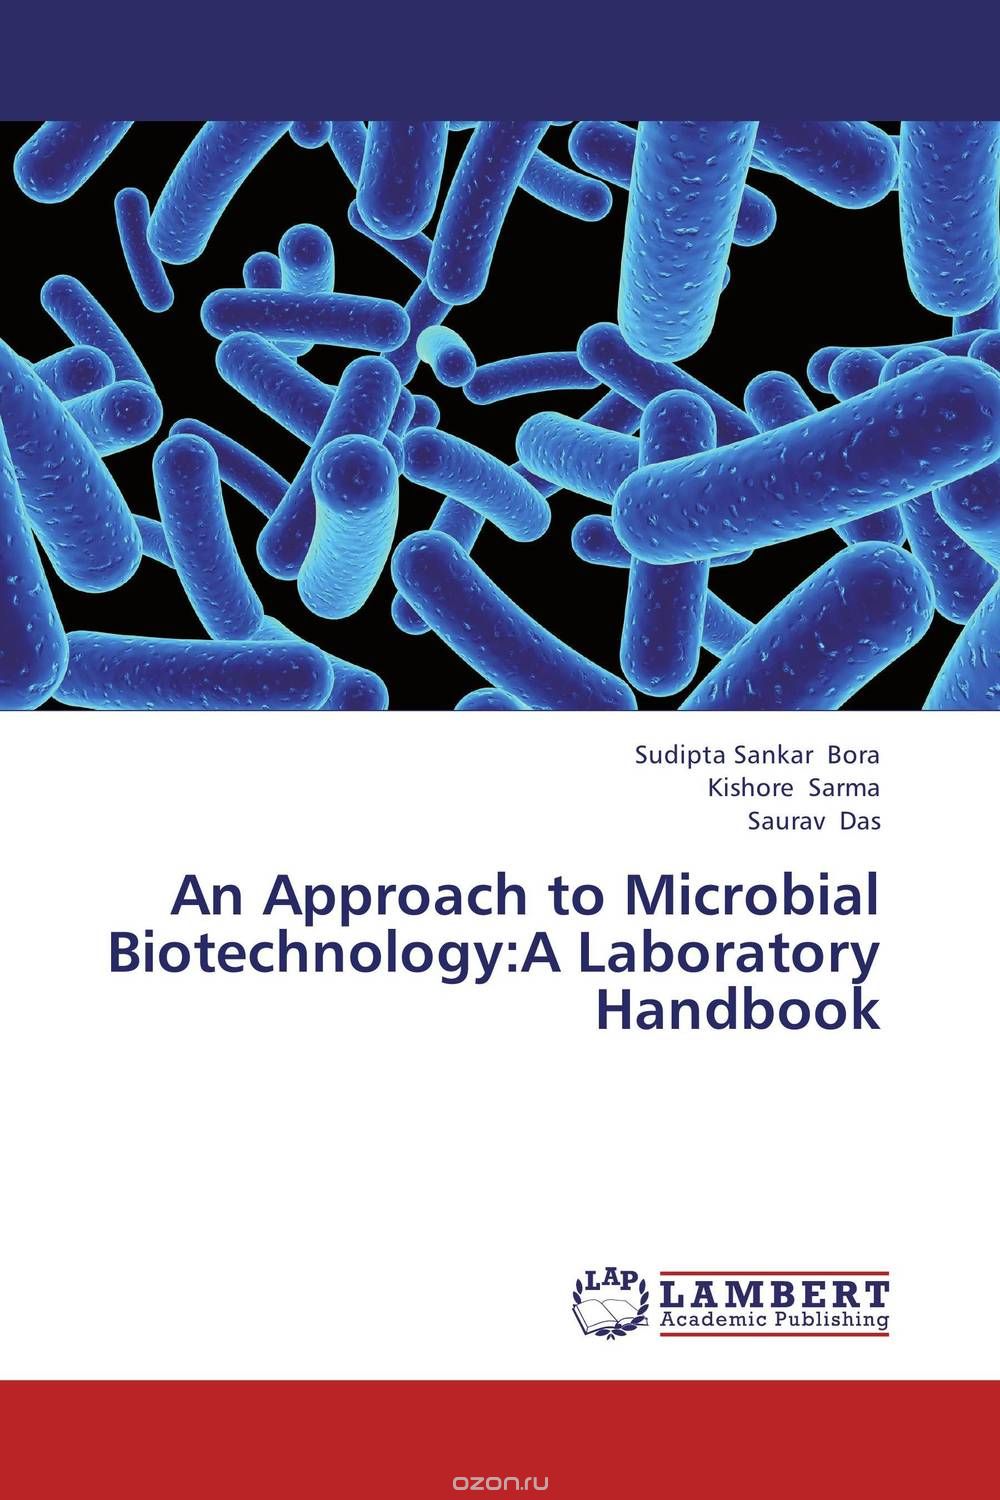 Скачать книгу "An Approach to Microbial Biotechnology:A Laboratory Handbook"